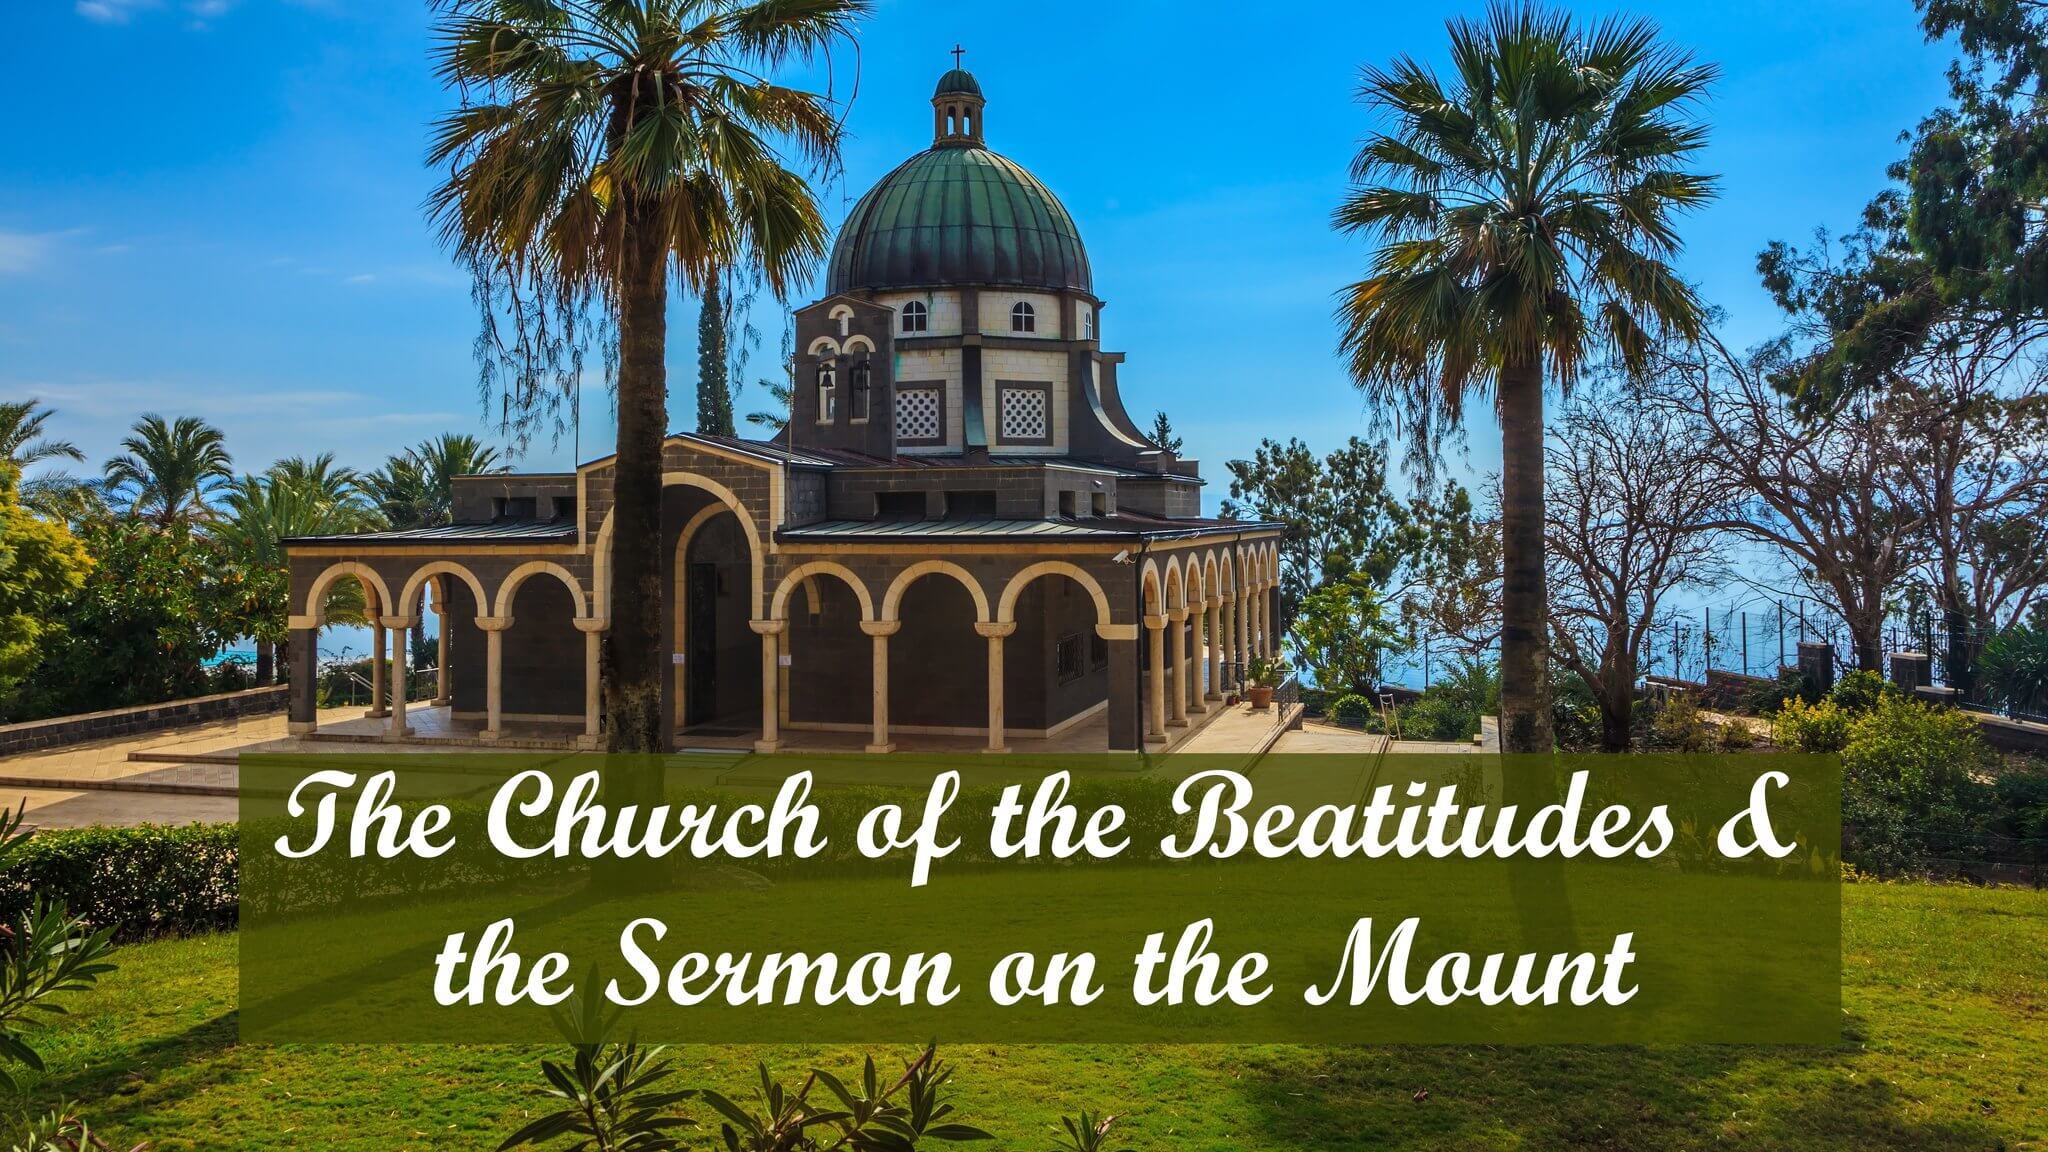 The Church of the Beatitudes & the Sermon on the Mount